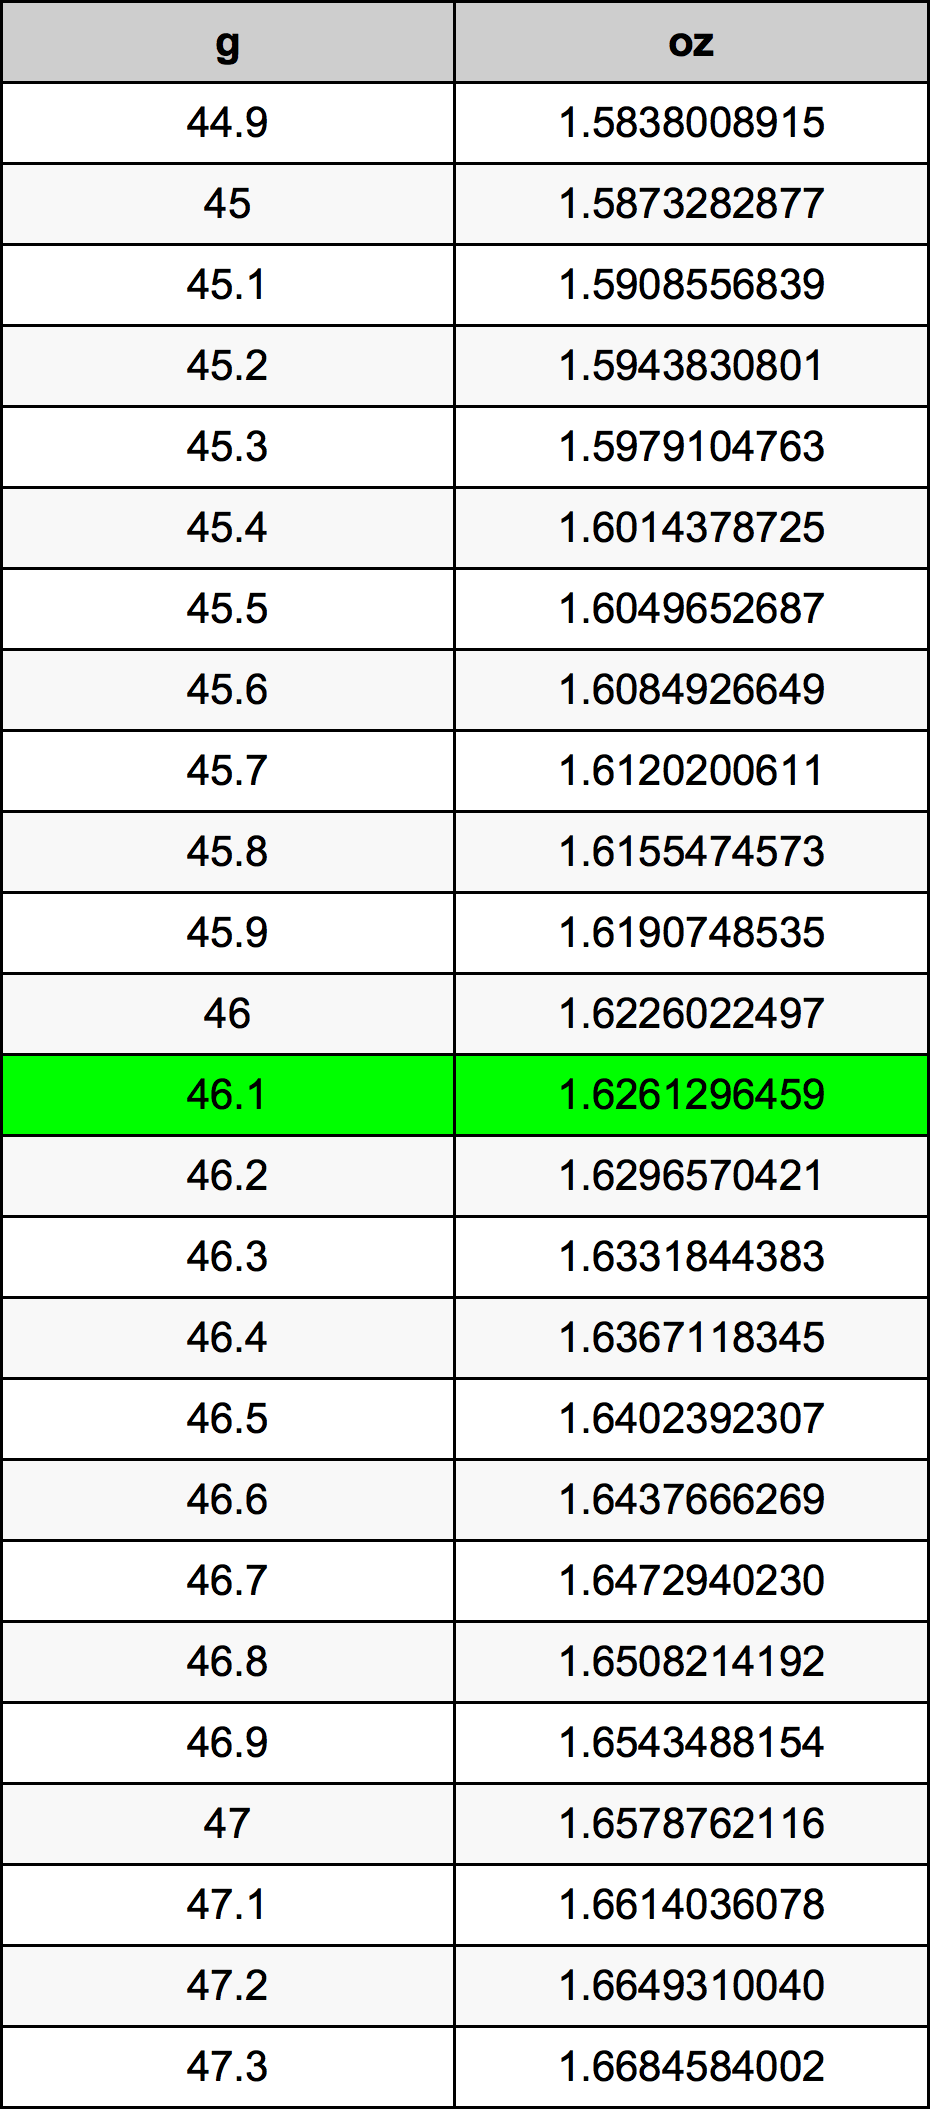 46.1 غرام جدول تحويل